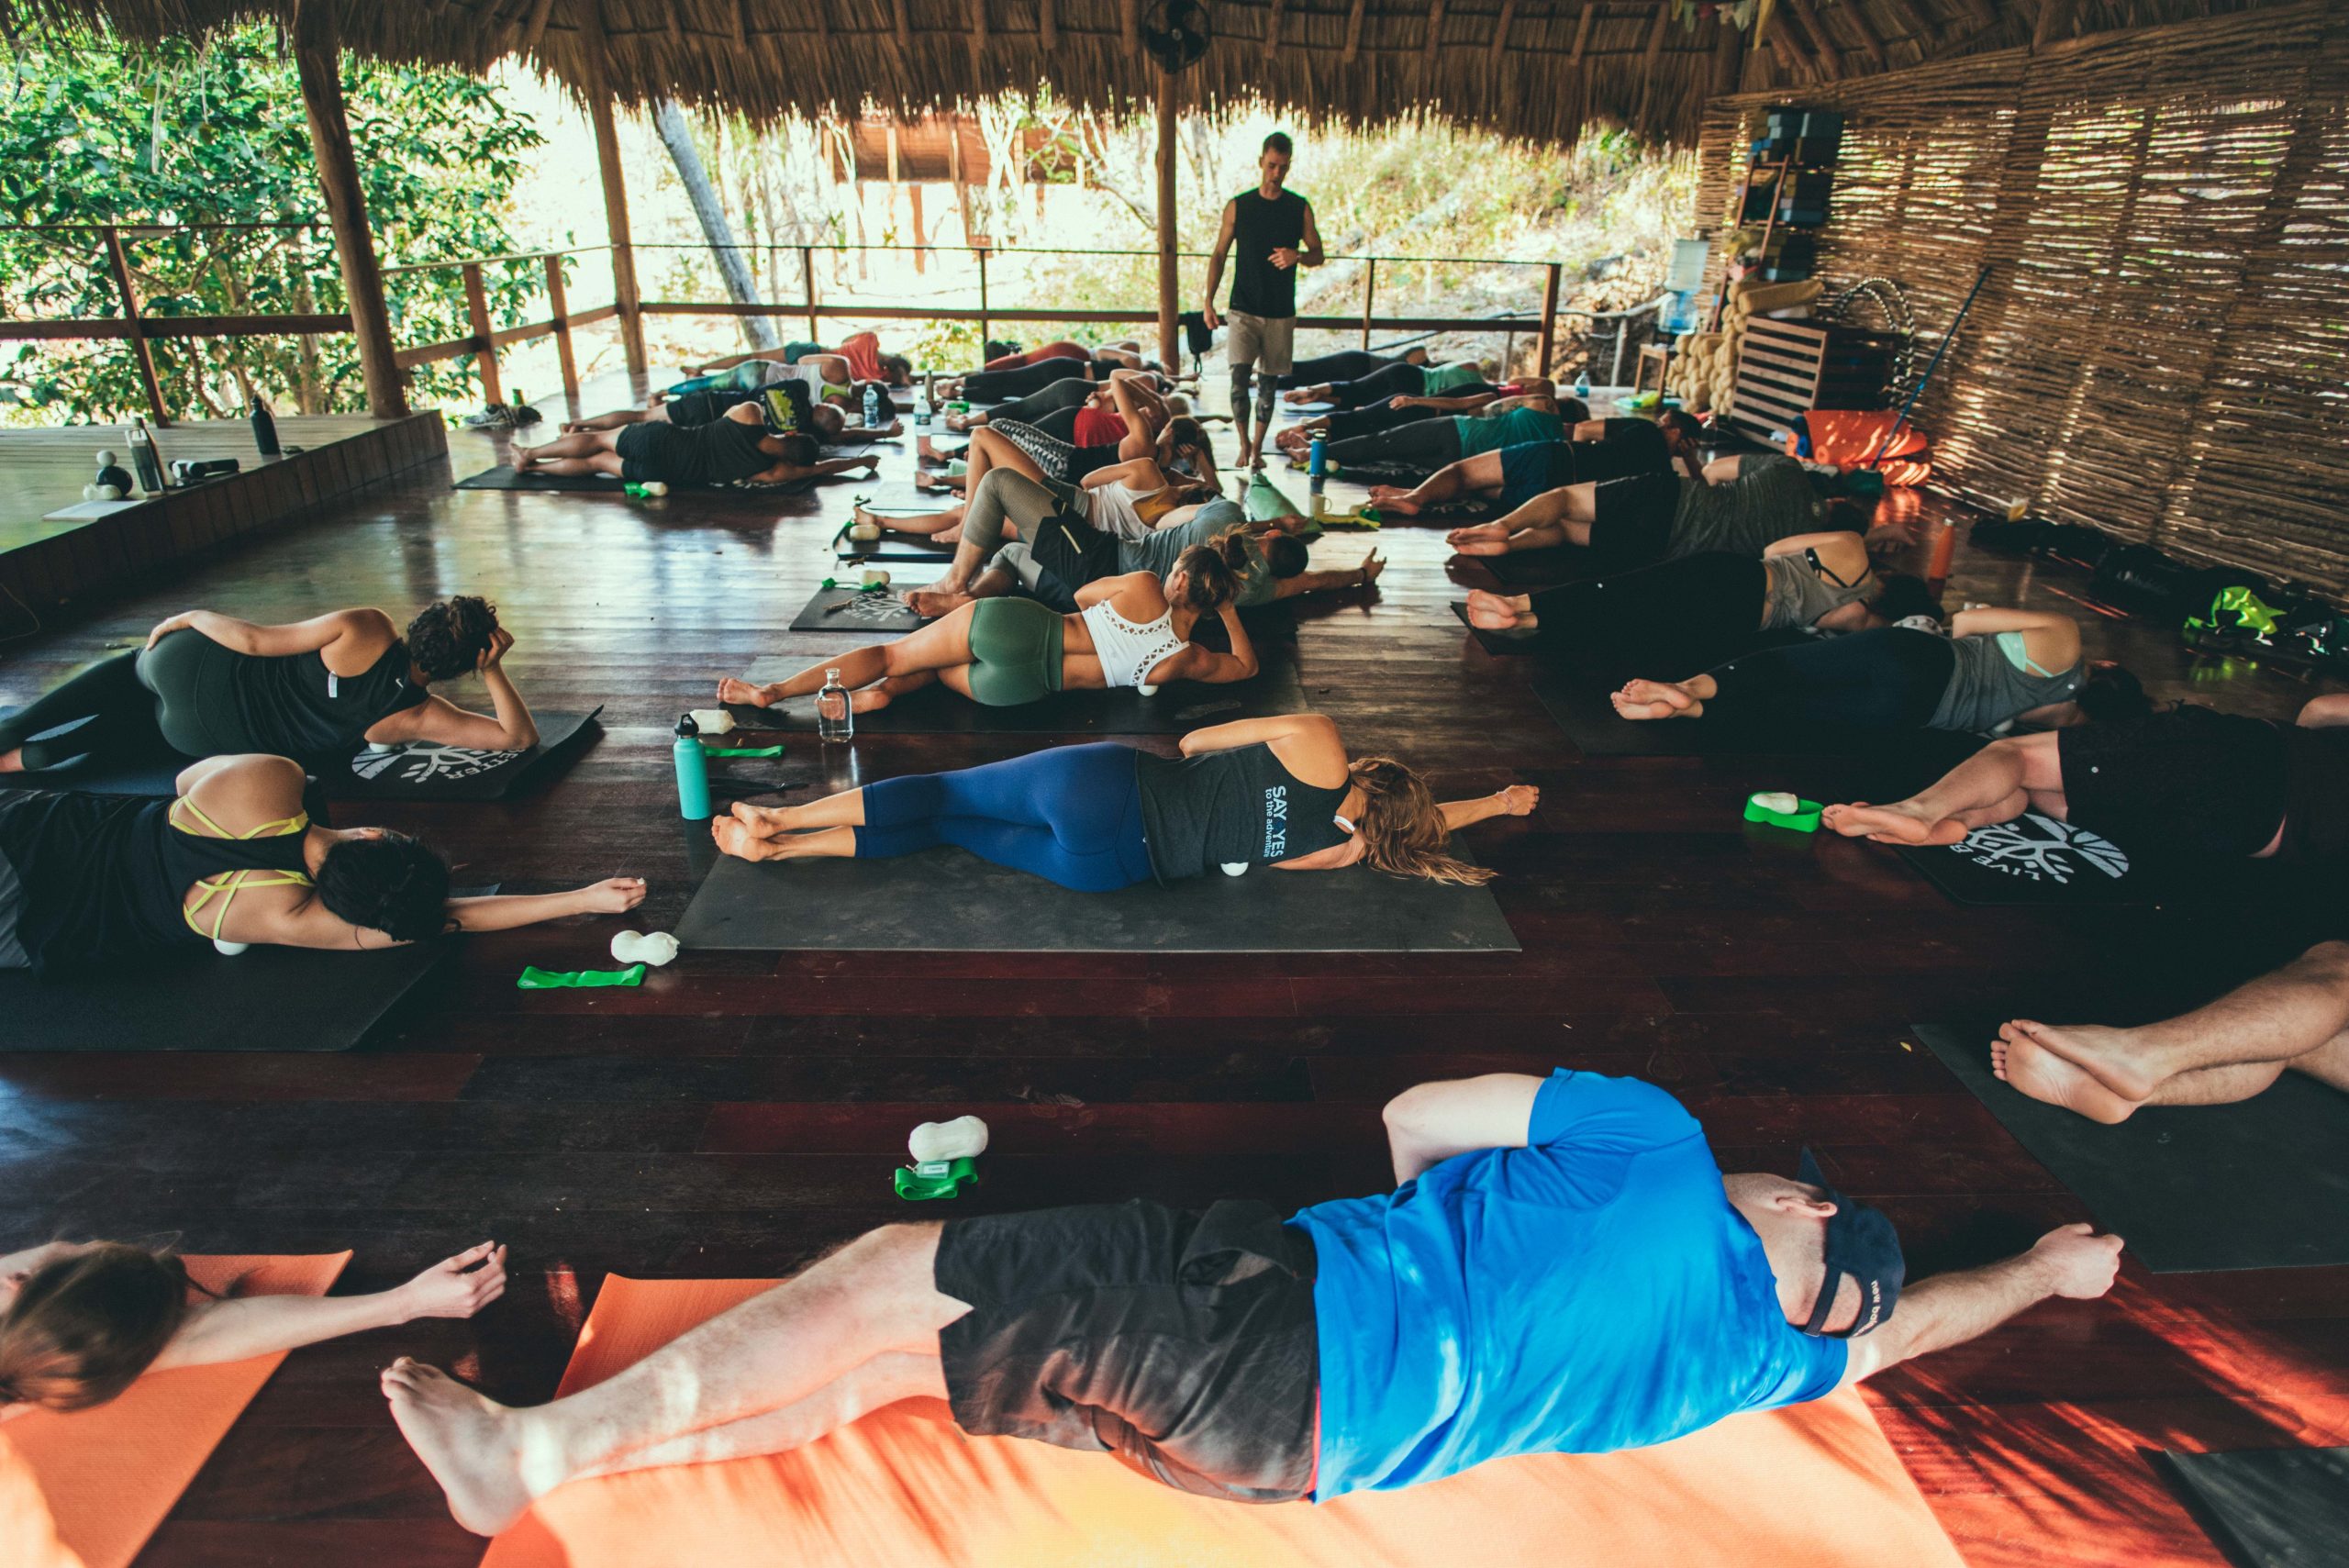 yogis sleep during practice